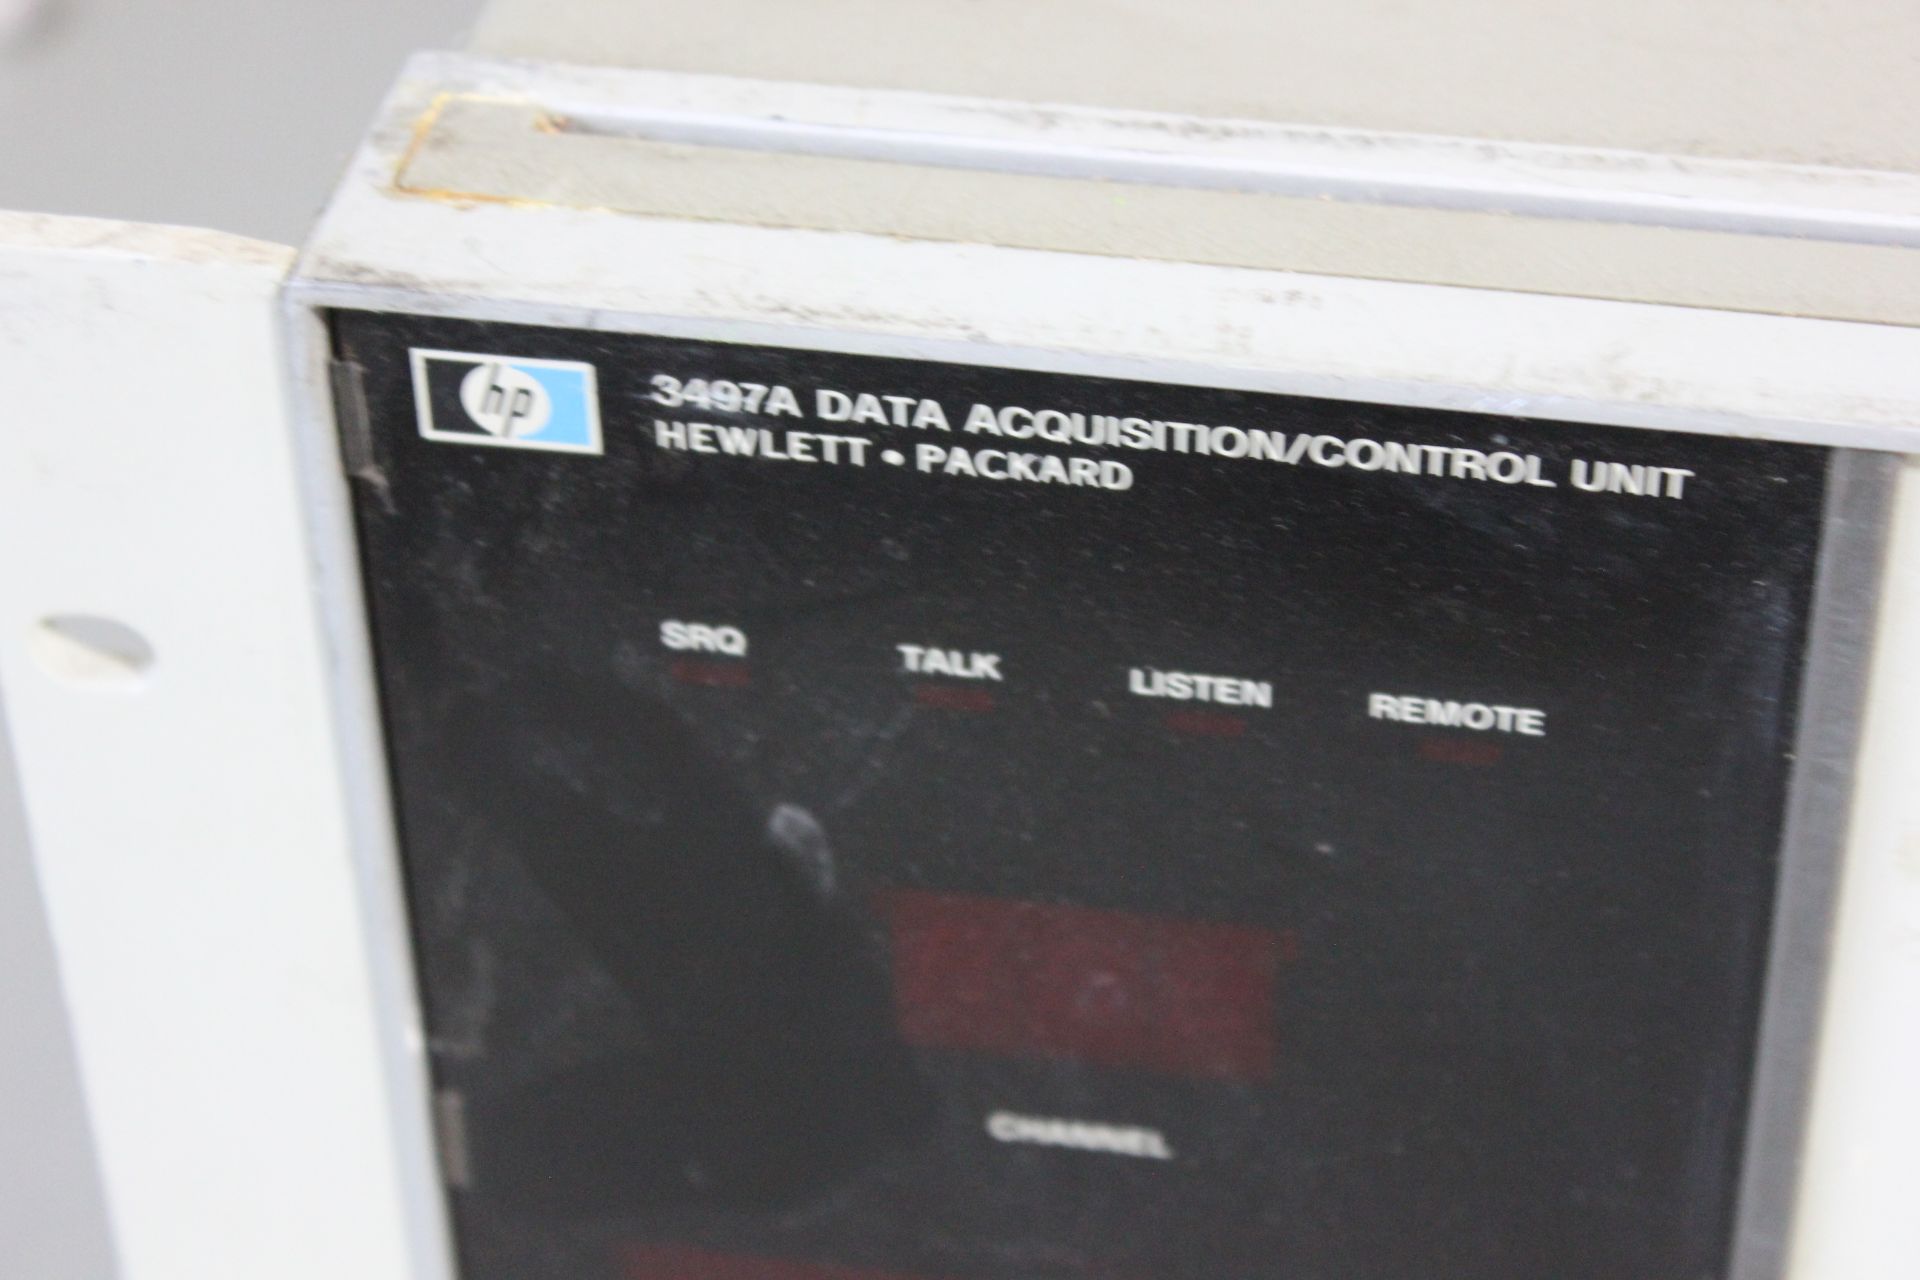 HP 3497A Data Acquisition /Control Unit - Image 2 of 3